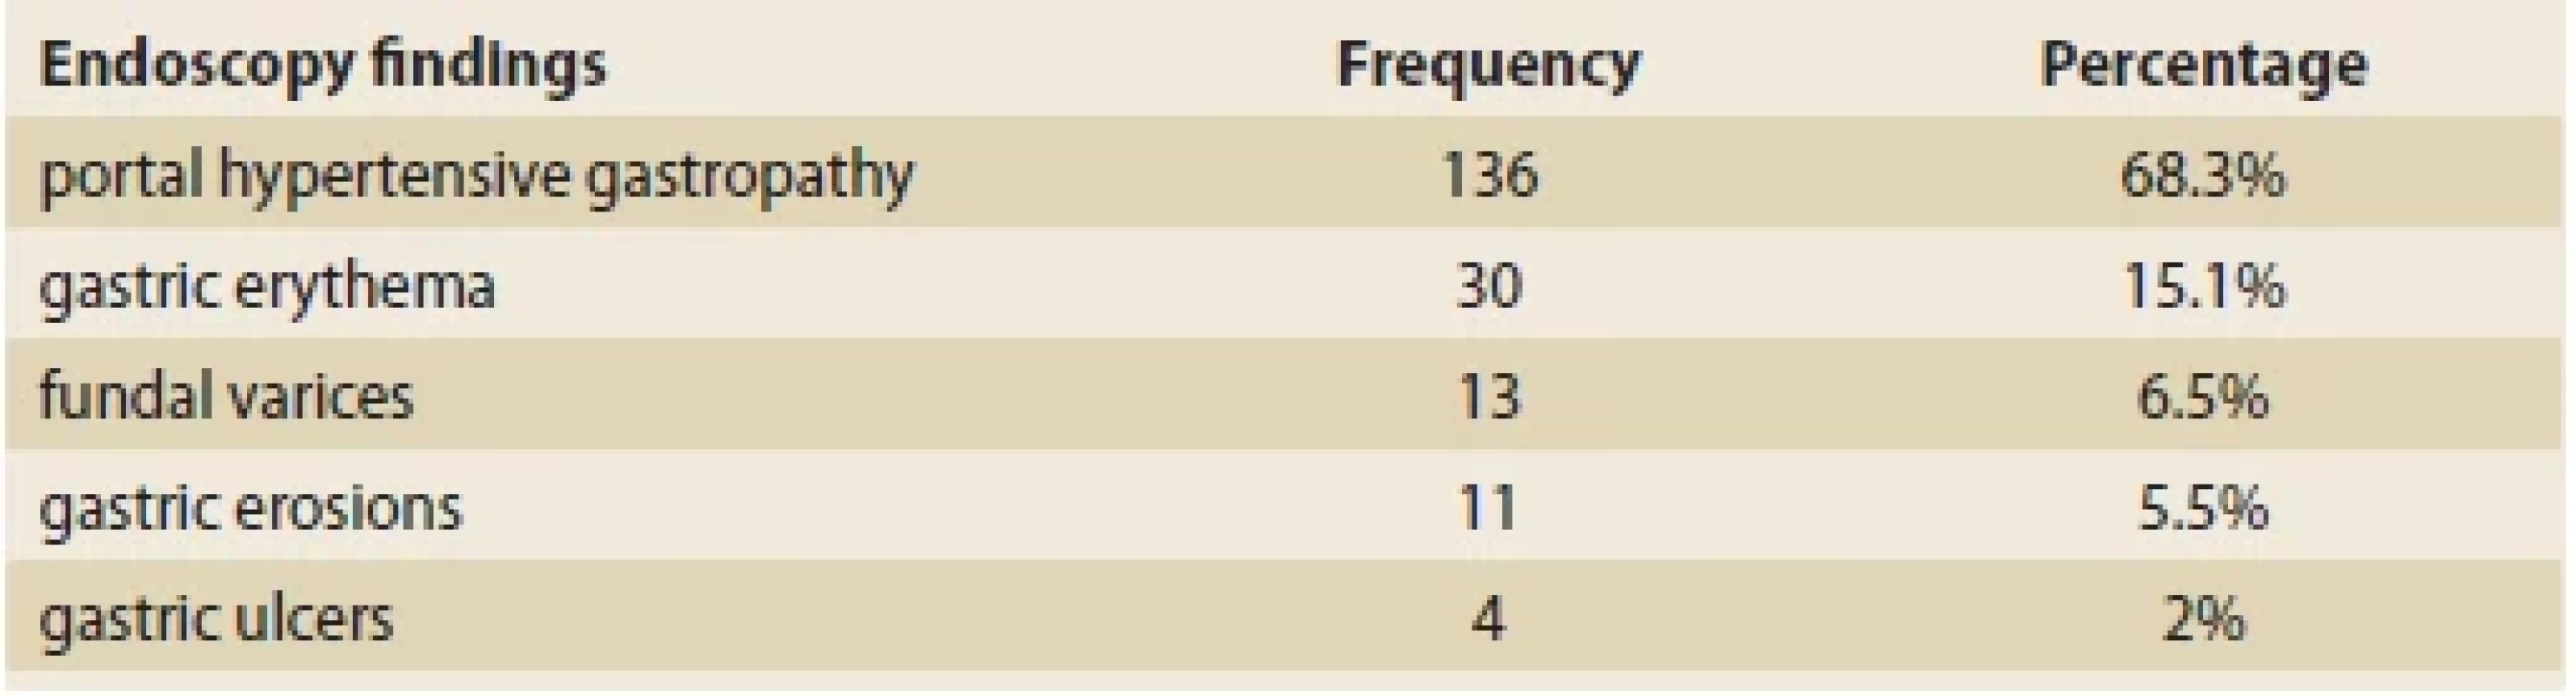 Endoscopy fi ndings in patients. <br>
Tab. 5. Endoskopické nálezy pacientů.